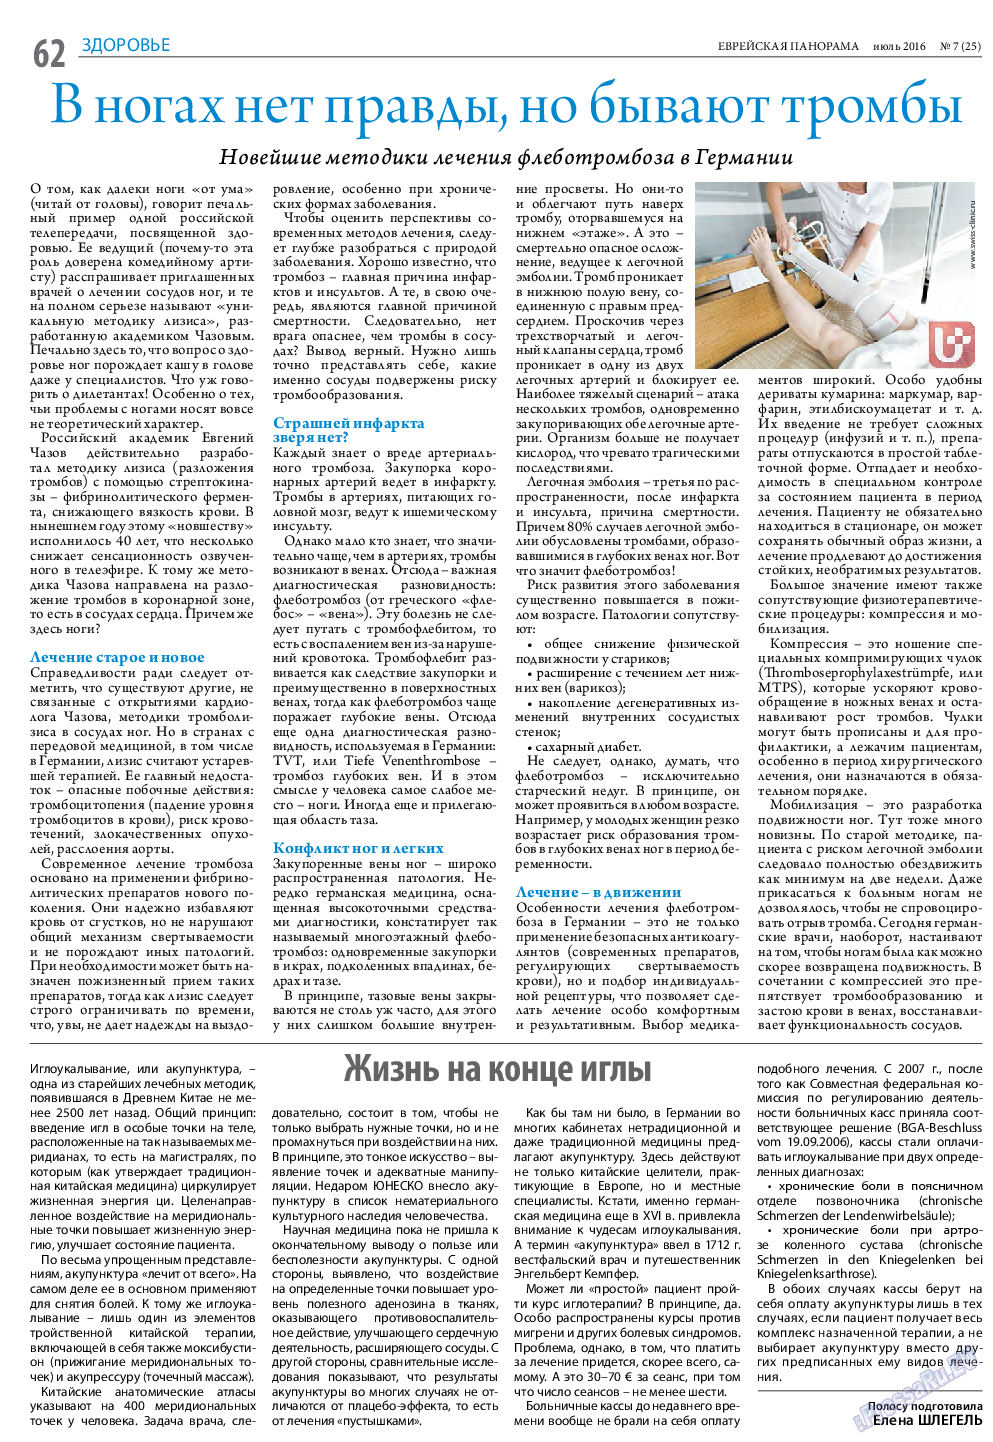 Еврейская панорама, газета. 2016 №7 стр.62